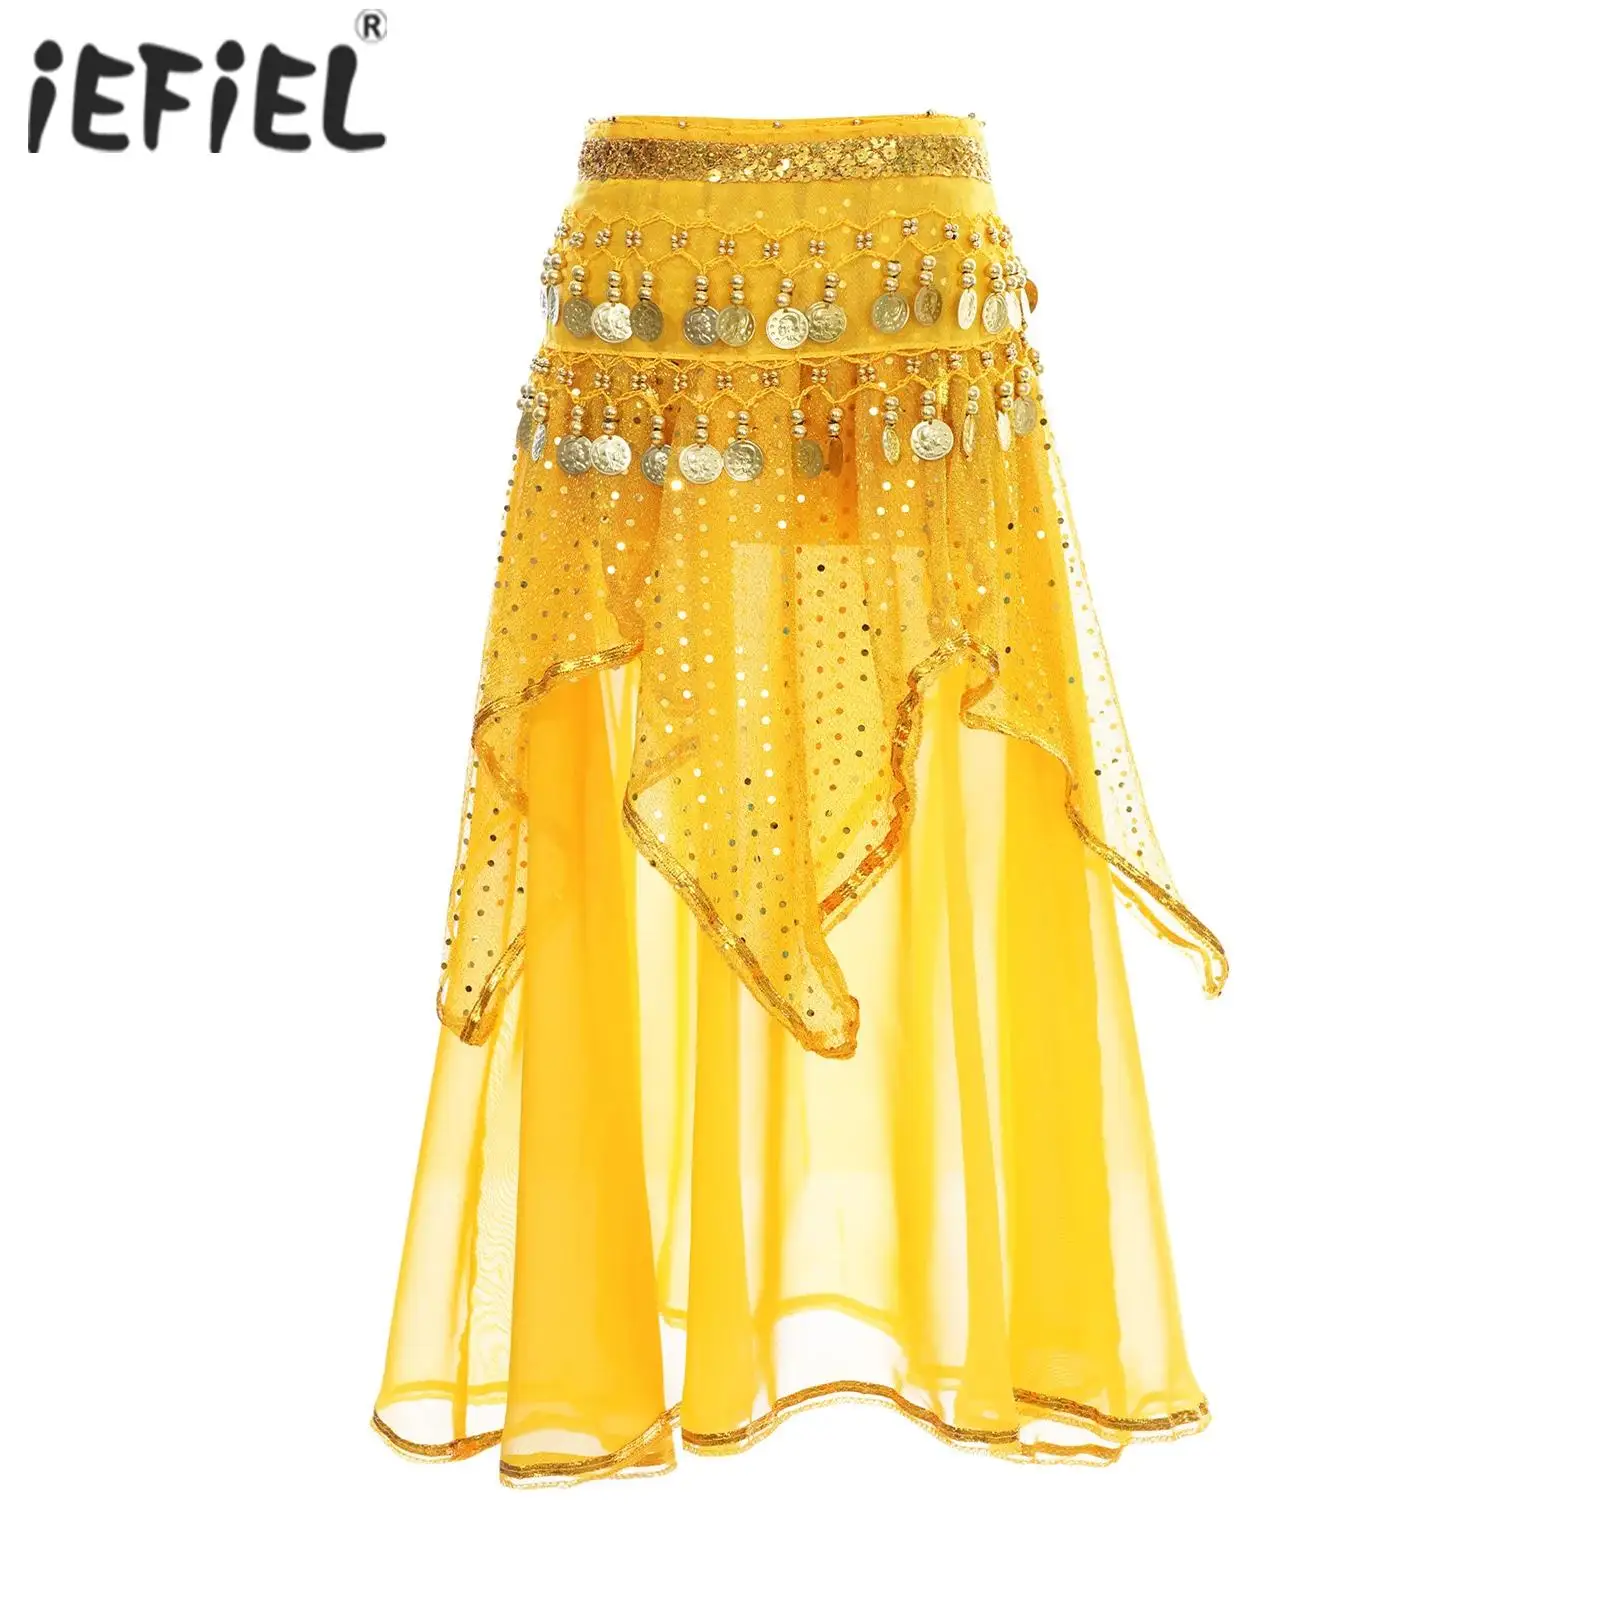 

Kids Girls Belly Dance Skirt with Gold Trim Sequined Dots Irregular Layered Skirt with Beads Coins Tassel Waist Chain Hip Scarf